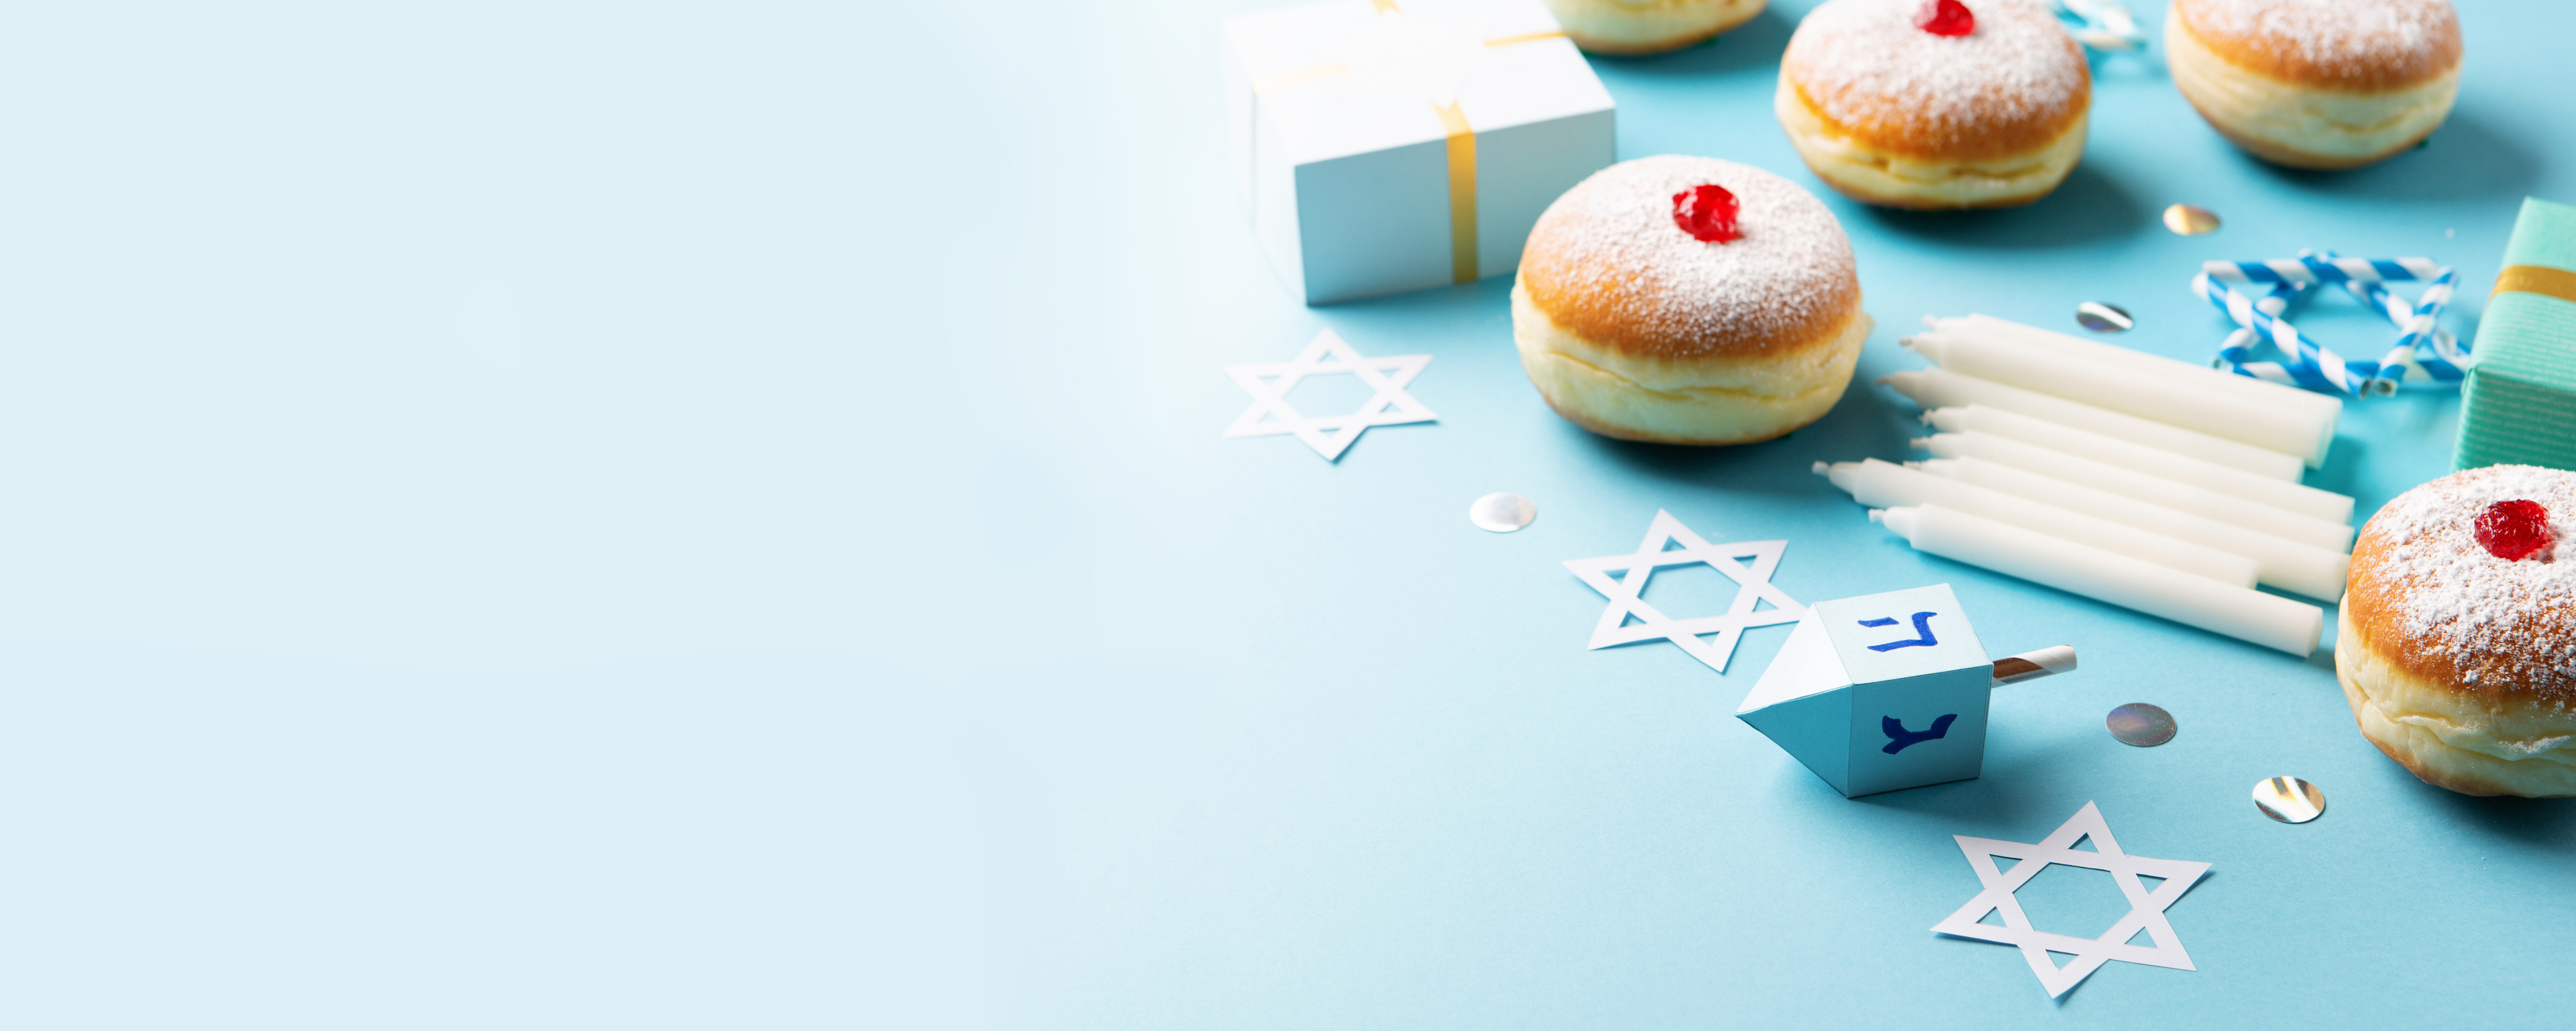 Jewish Holiday Hanukkah Concept - Hanukkah Sweet Doughnut with P